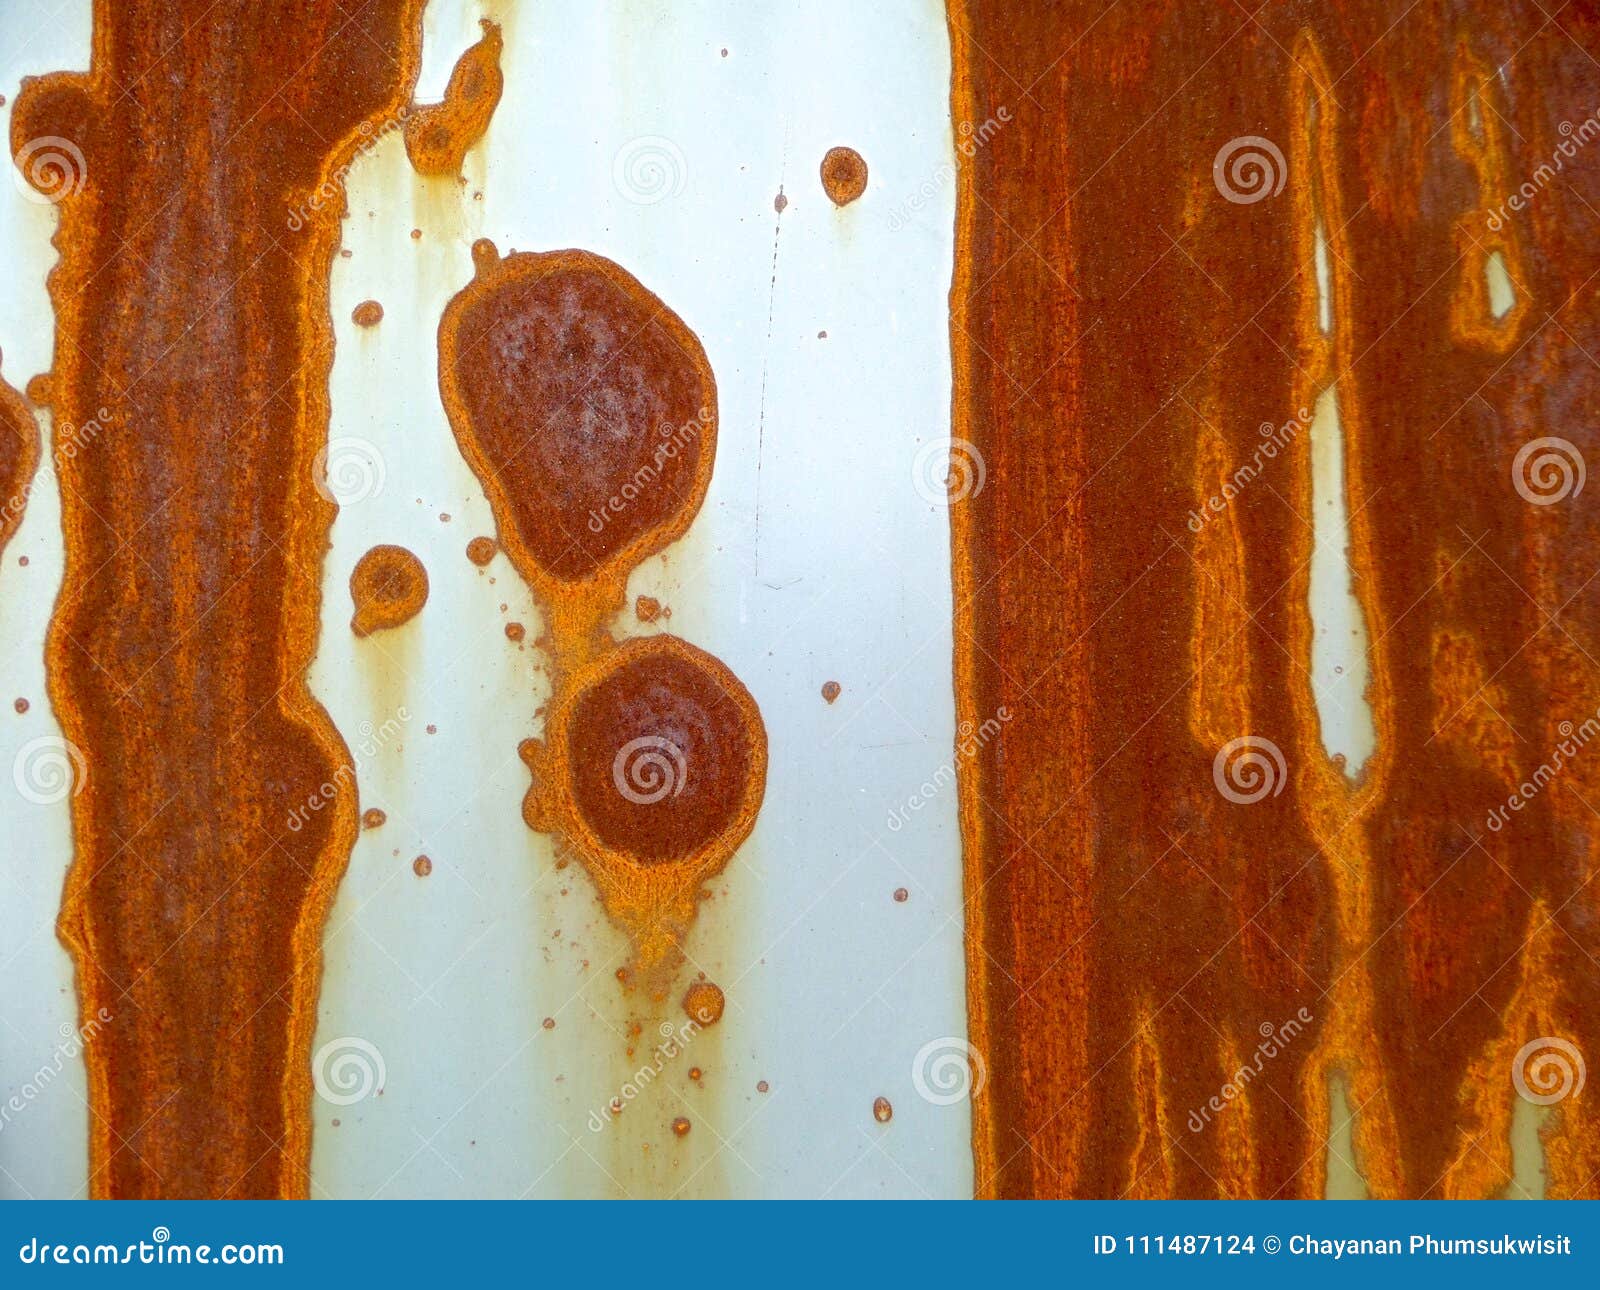 Can metal rust in water фото 114